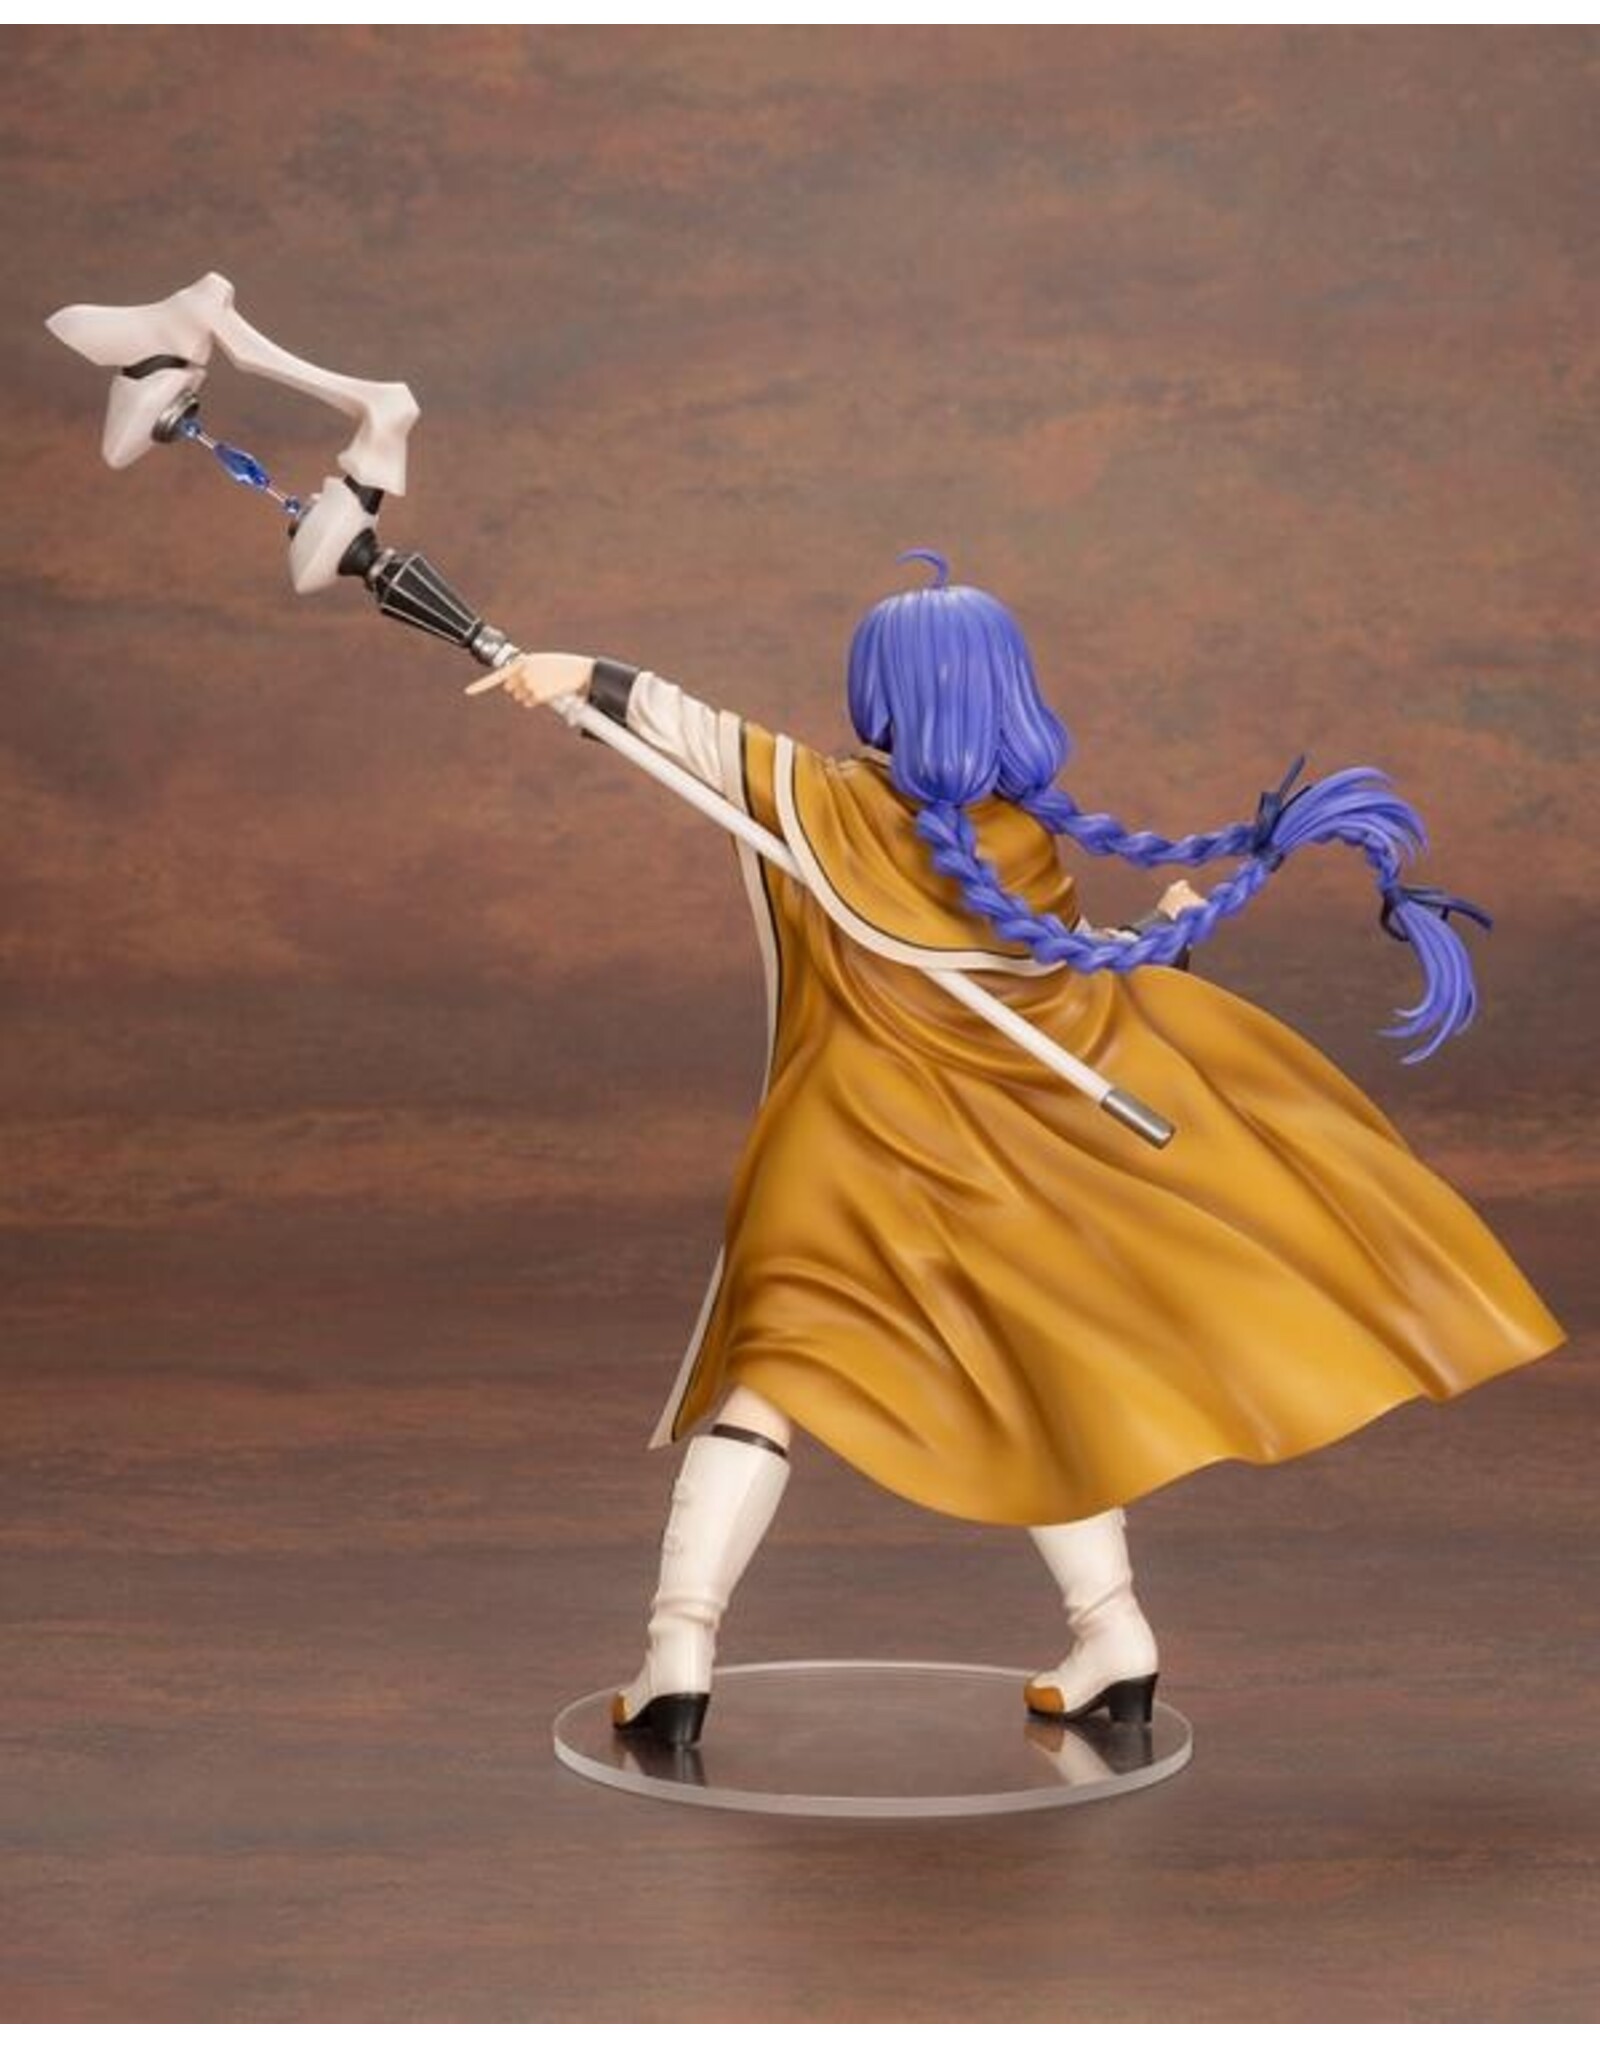 Mushoku Tensei Roxy Migurdia Figure1/8 Scale Figure